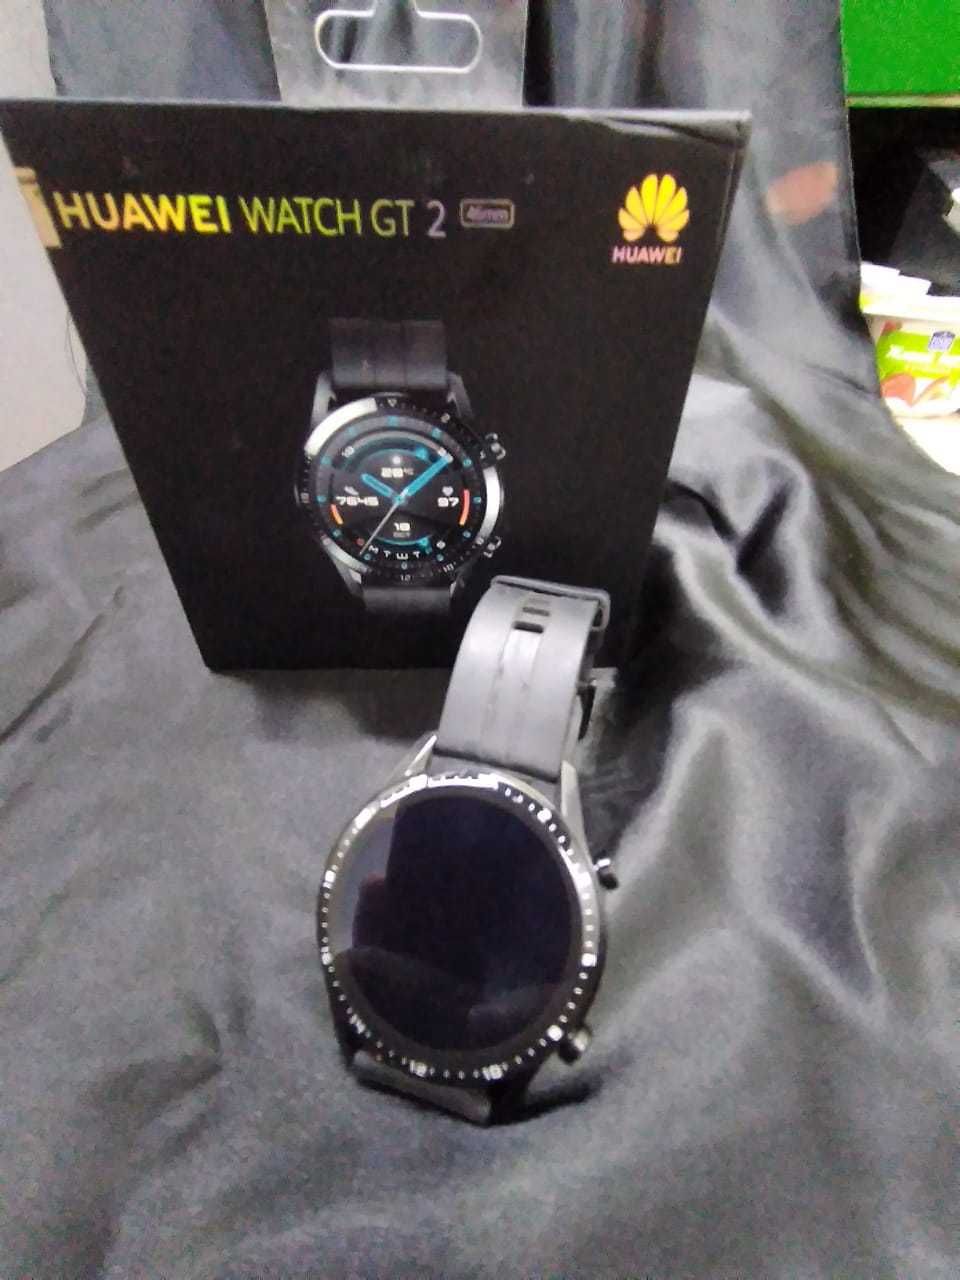 продам смарт часы  Xuawei Watch GT 2 (Балпык би)ЛОТ 336613